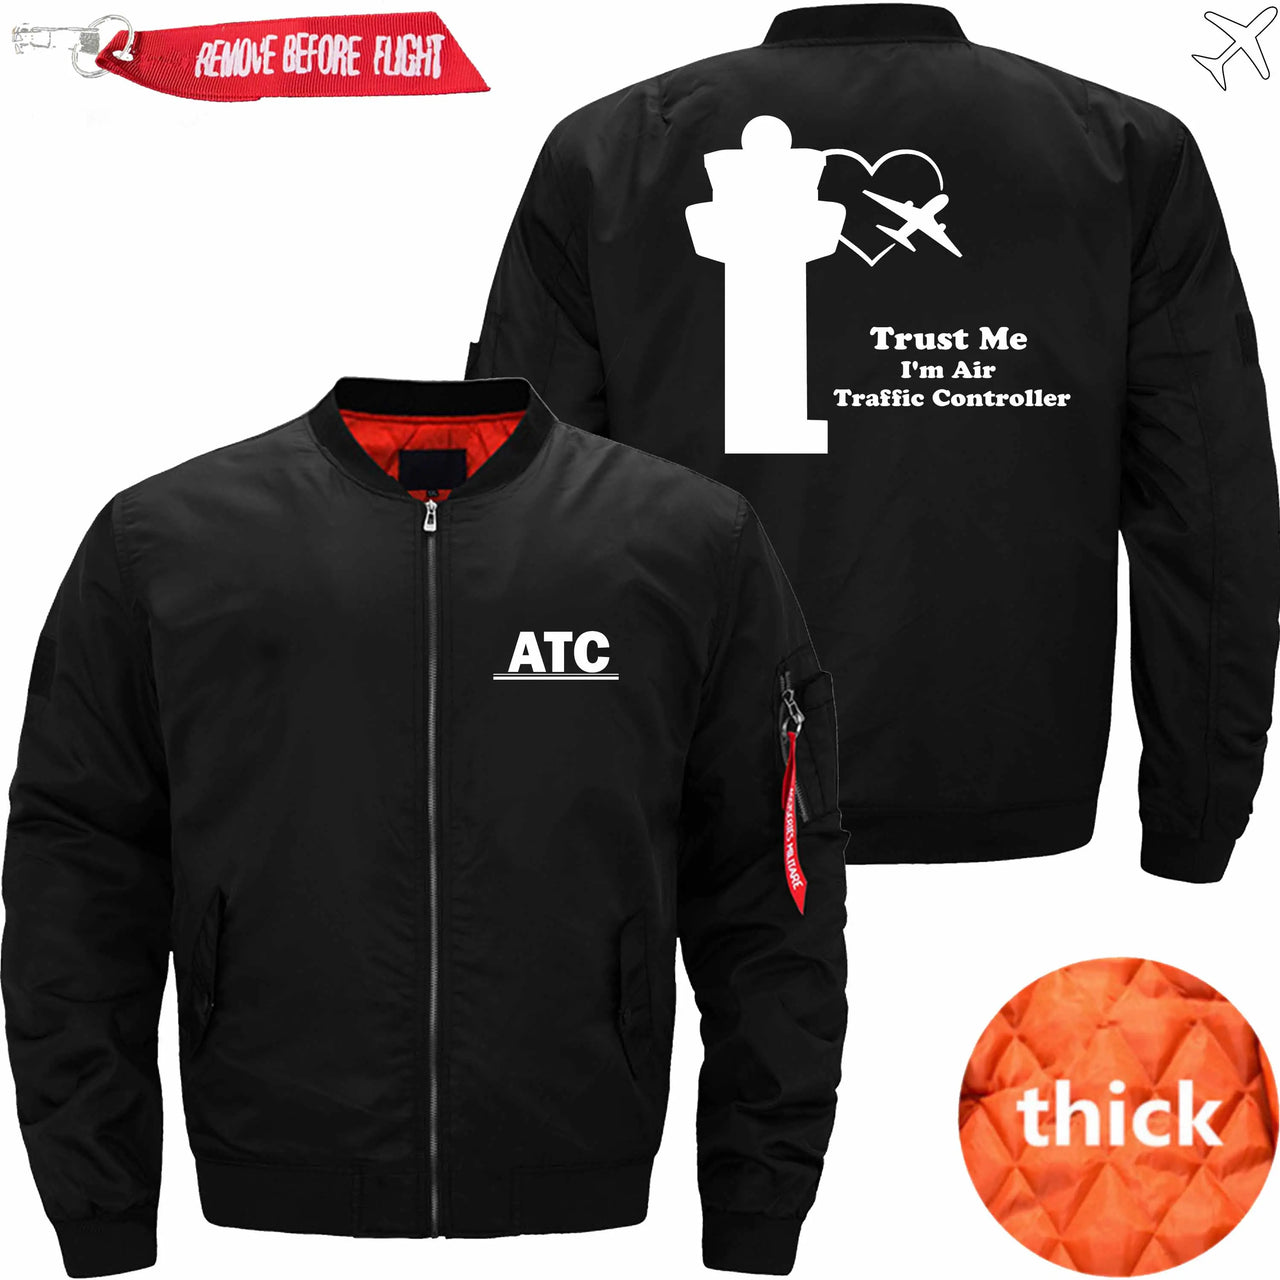 TRUST ME-ATC - JACKET THE AV8R